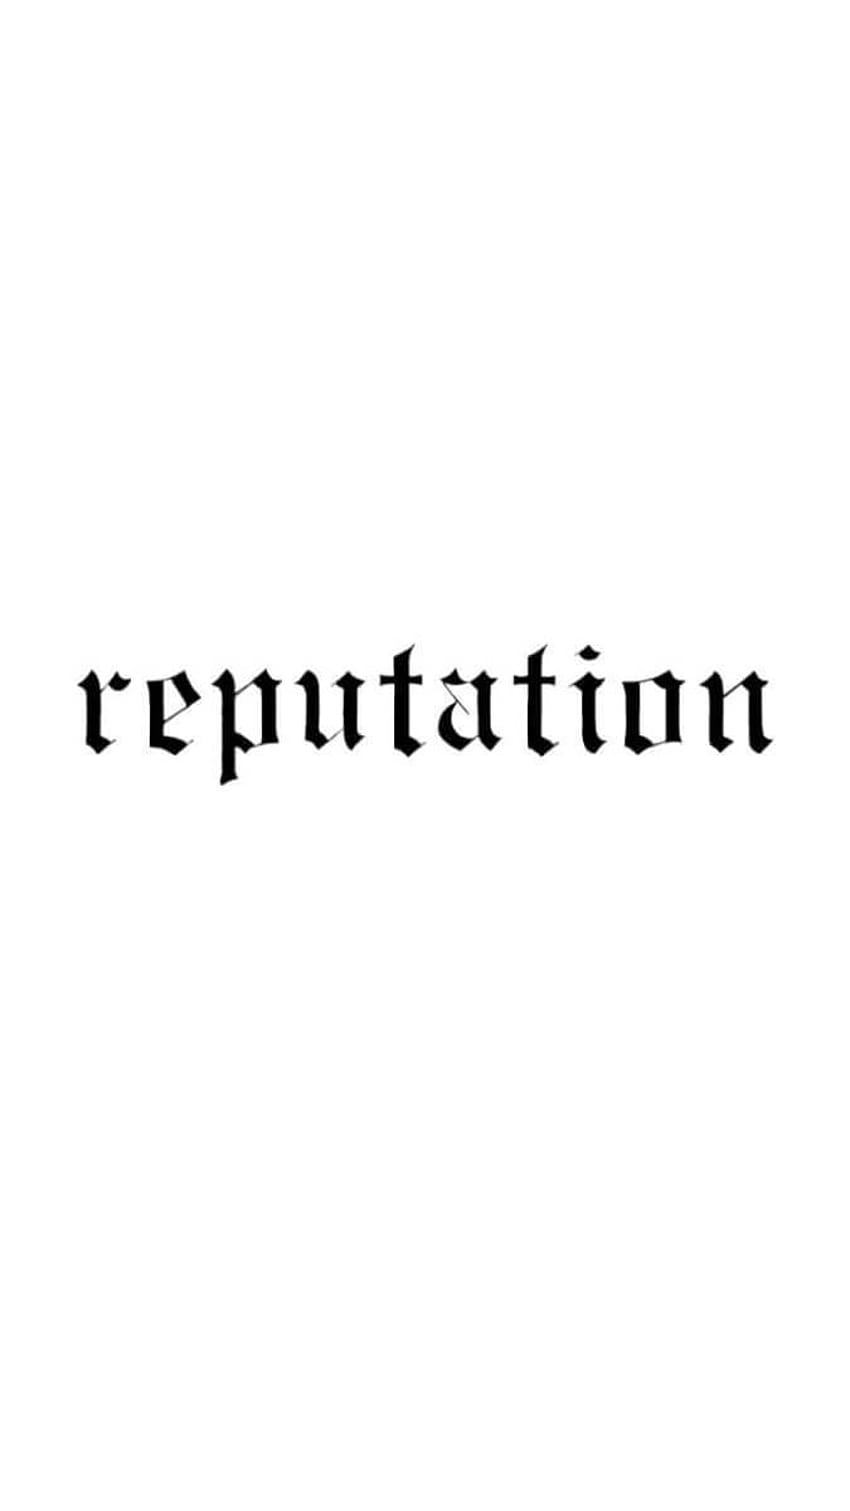 Reputation ⛅ shared by dansie, aesthetic reputation HD phone wallpaper